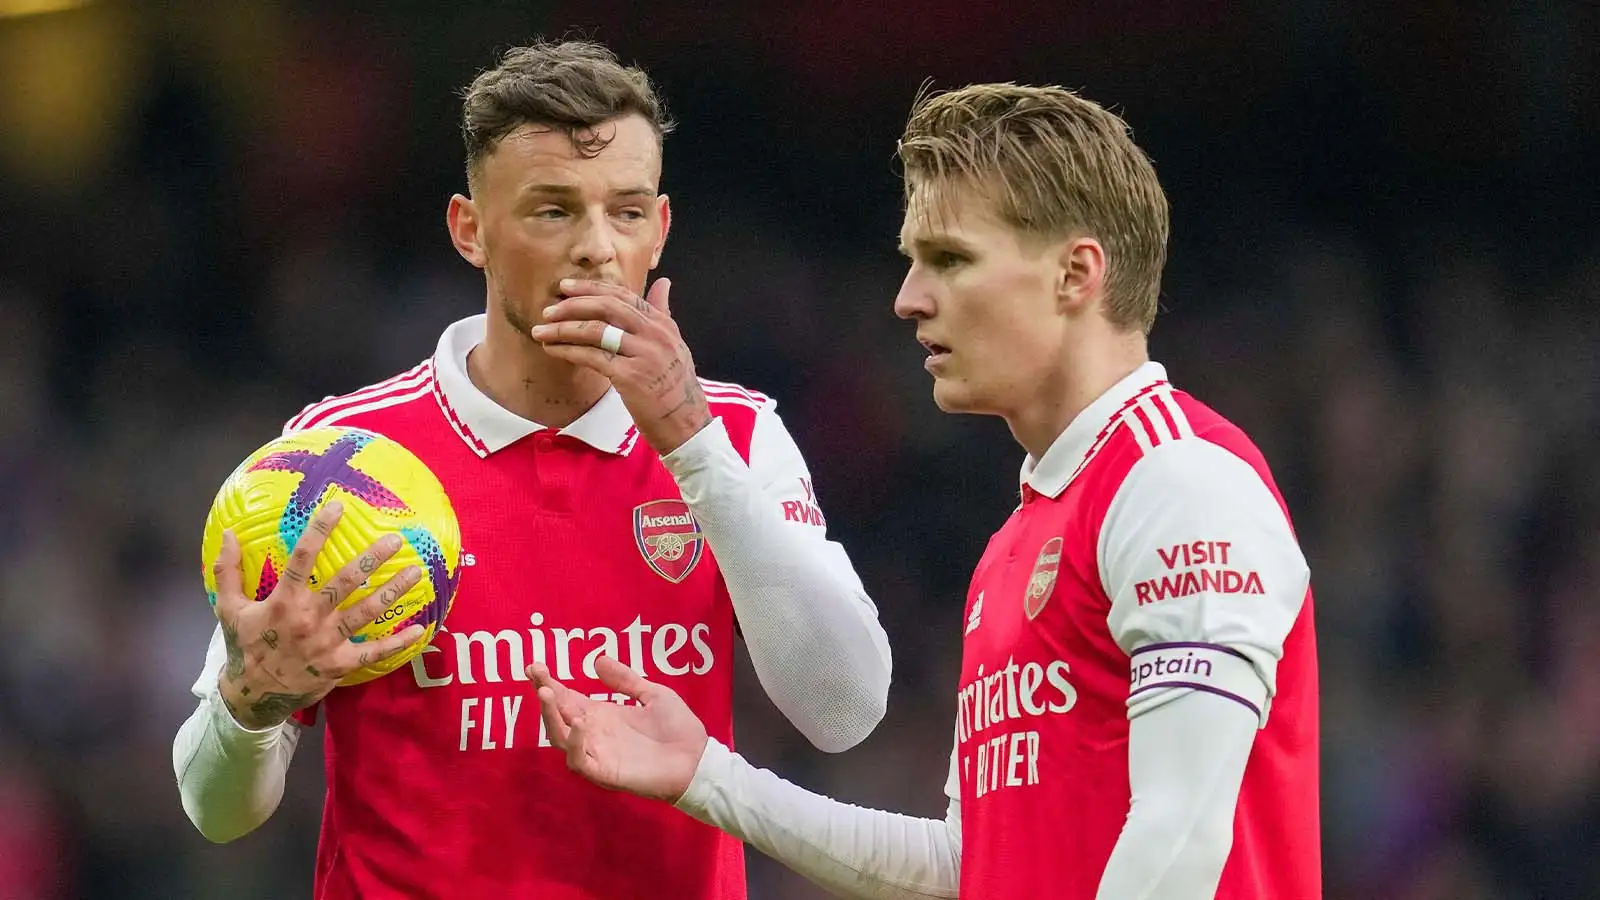 Arsenal's Ben White talks with teammate Martin Odegaard